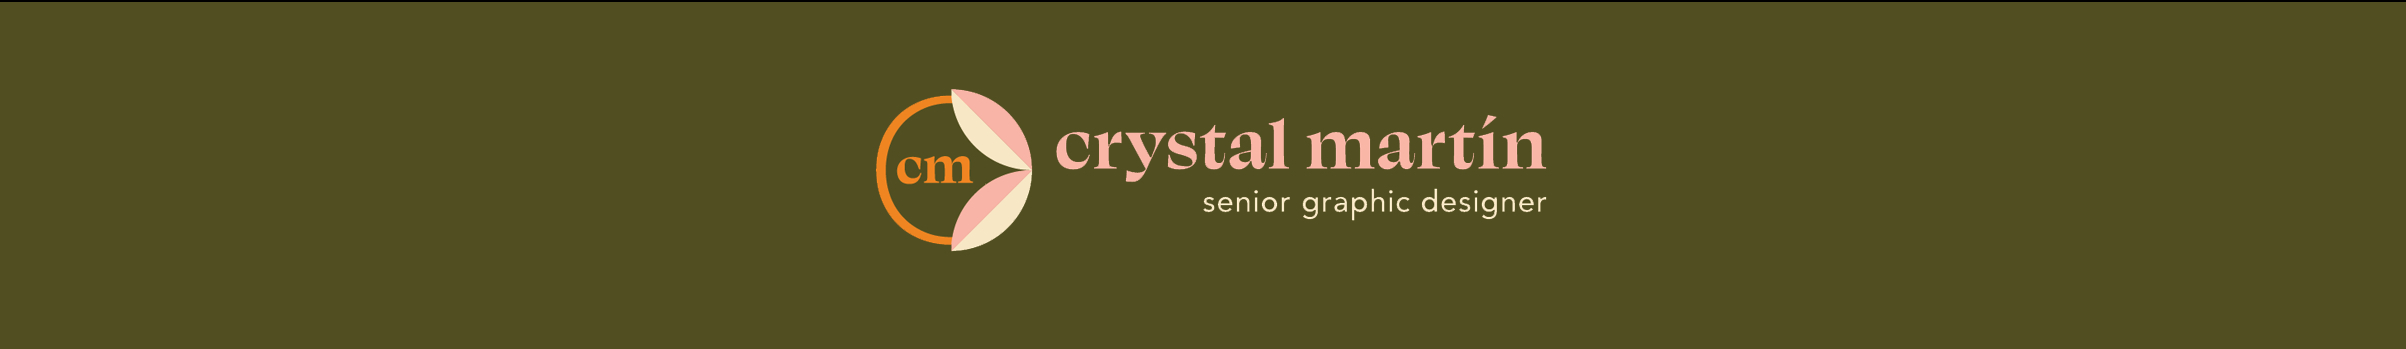 Banner de perfil de Crystal Martin